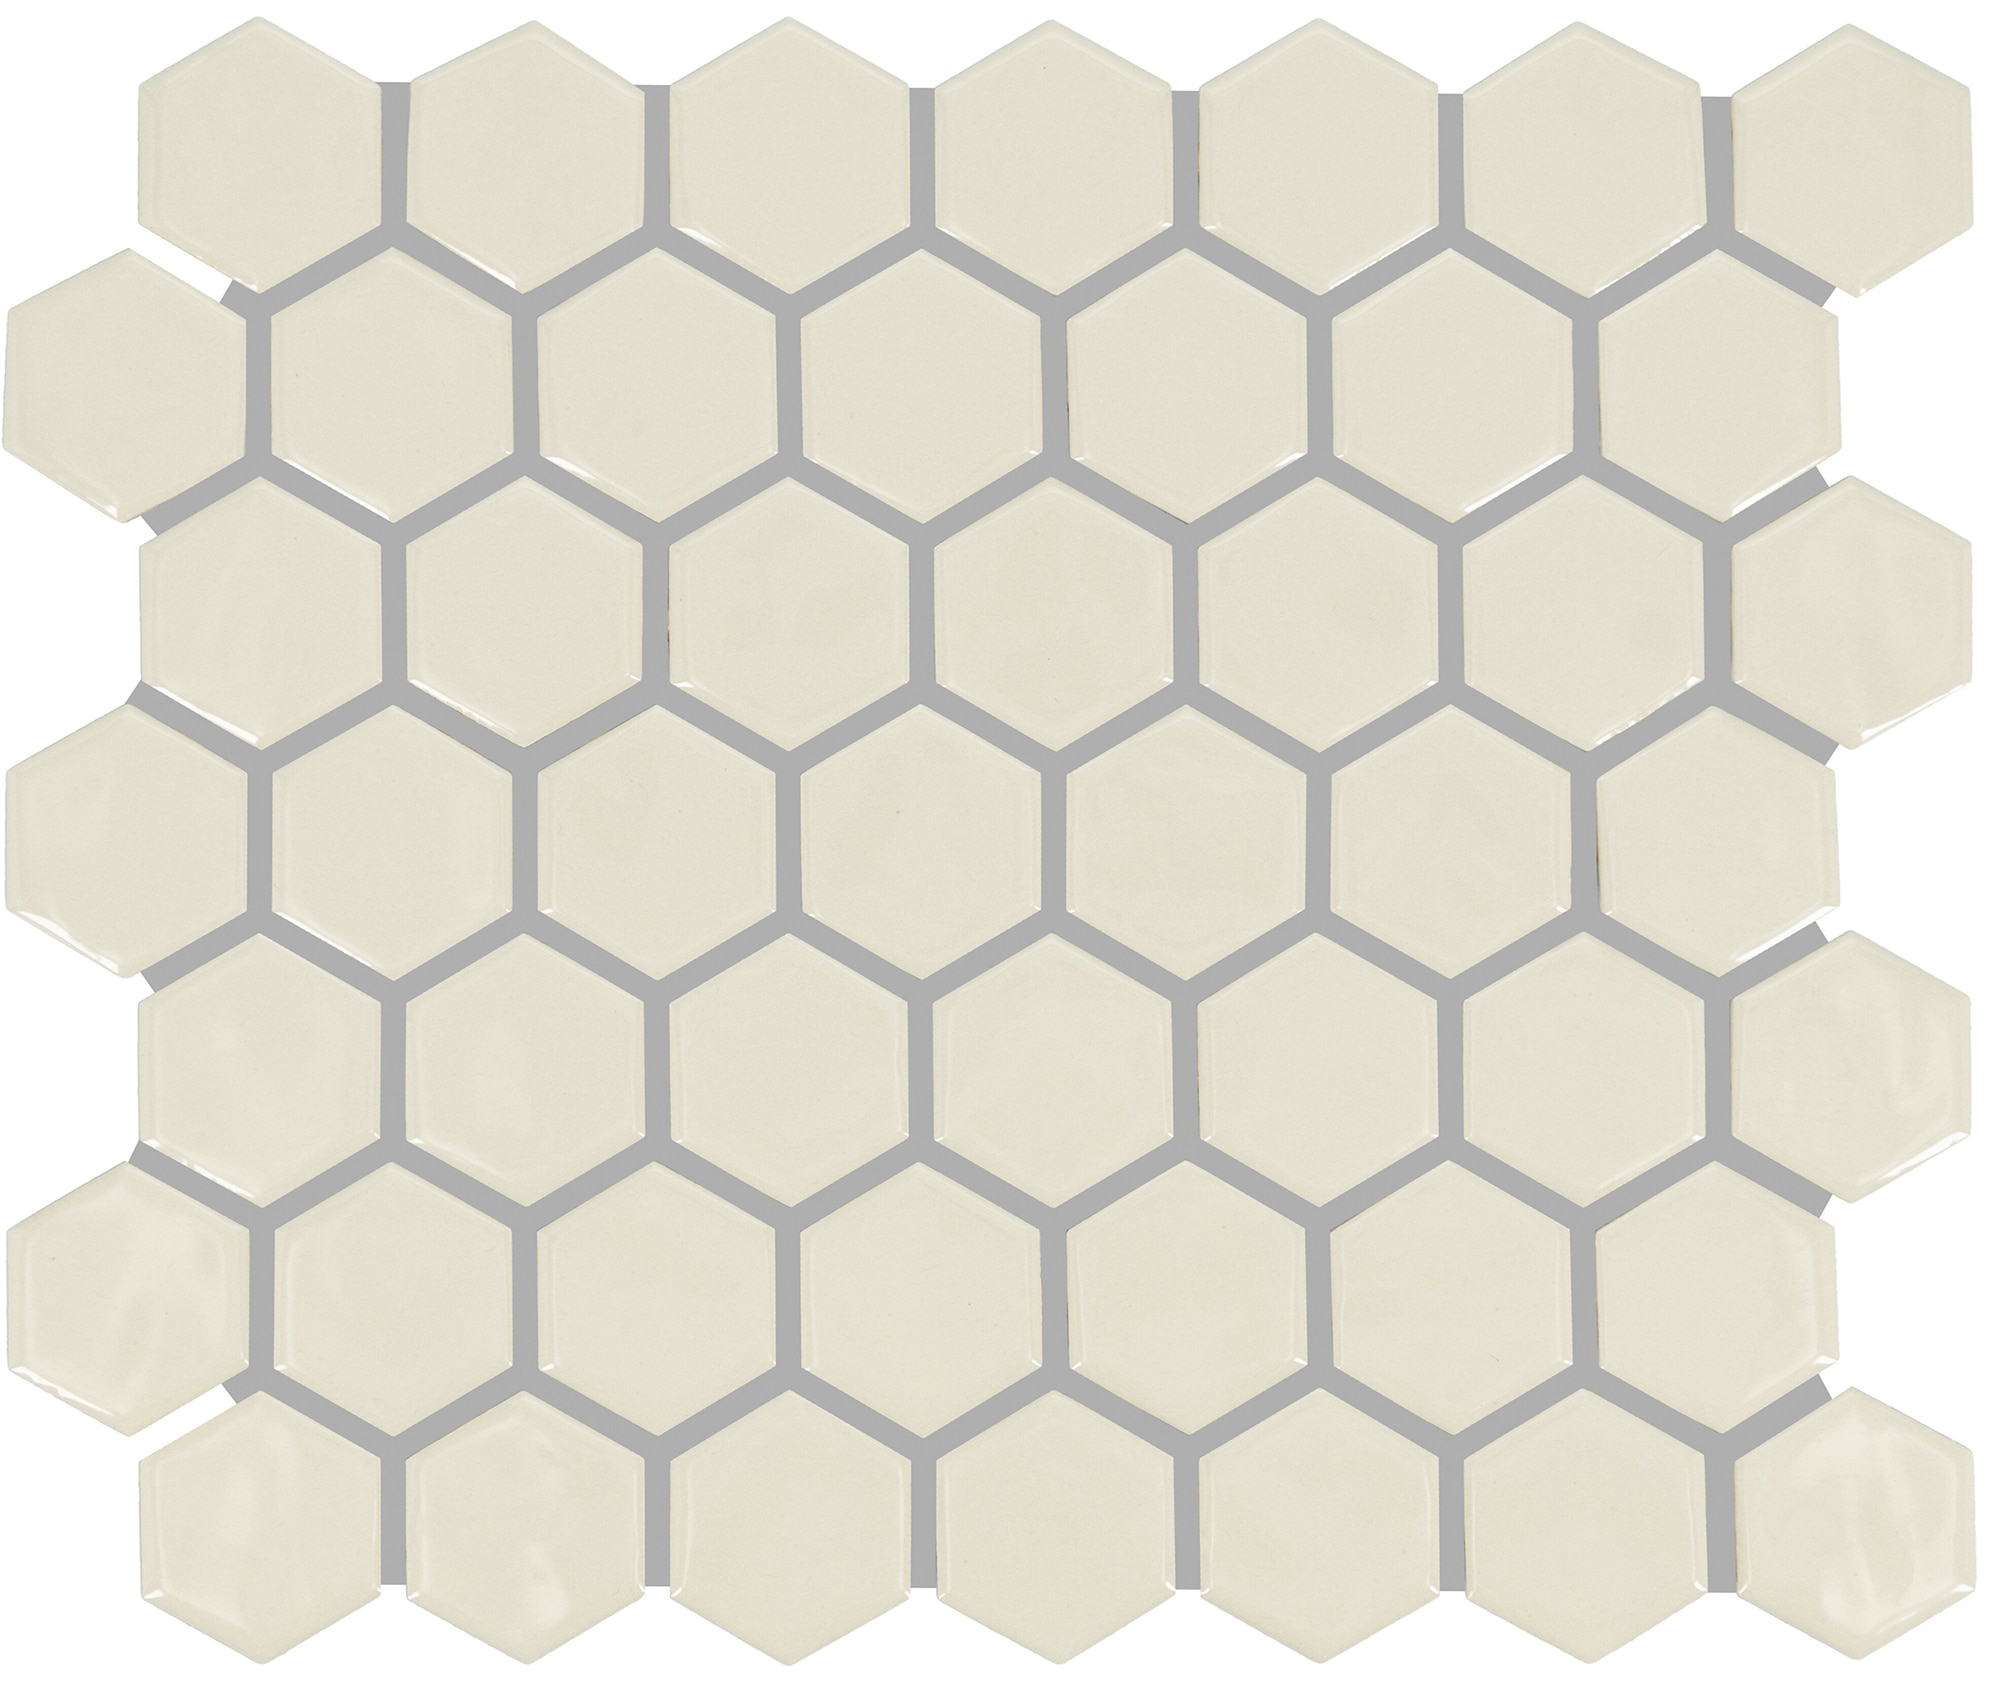 Nordic Sand, Hexagon, 1.5, Glossy